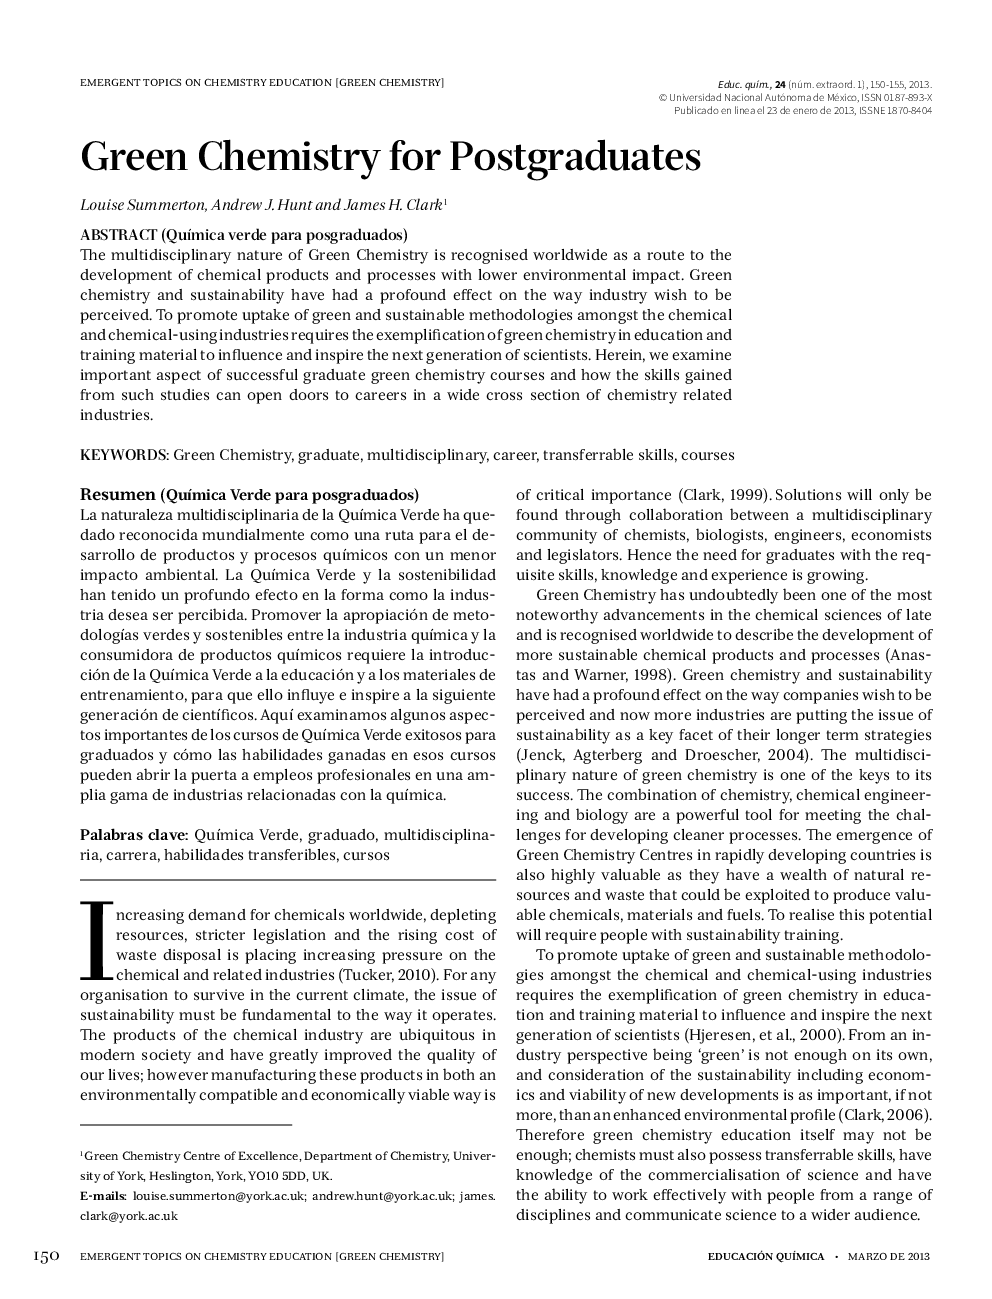 Green Chemistry for Postgraduates